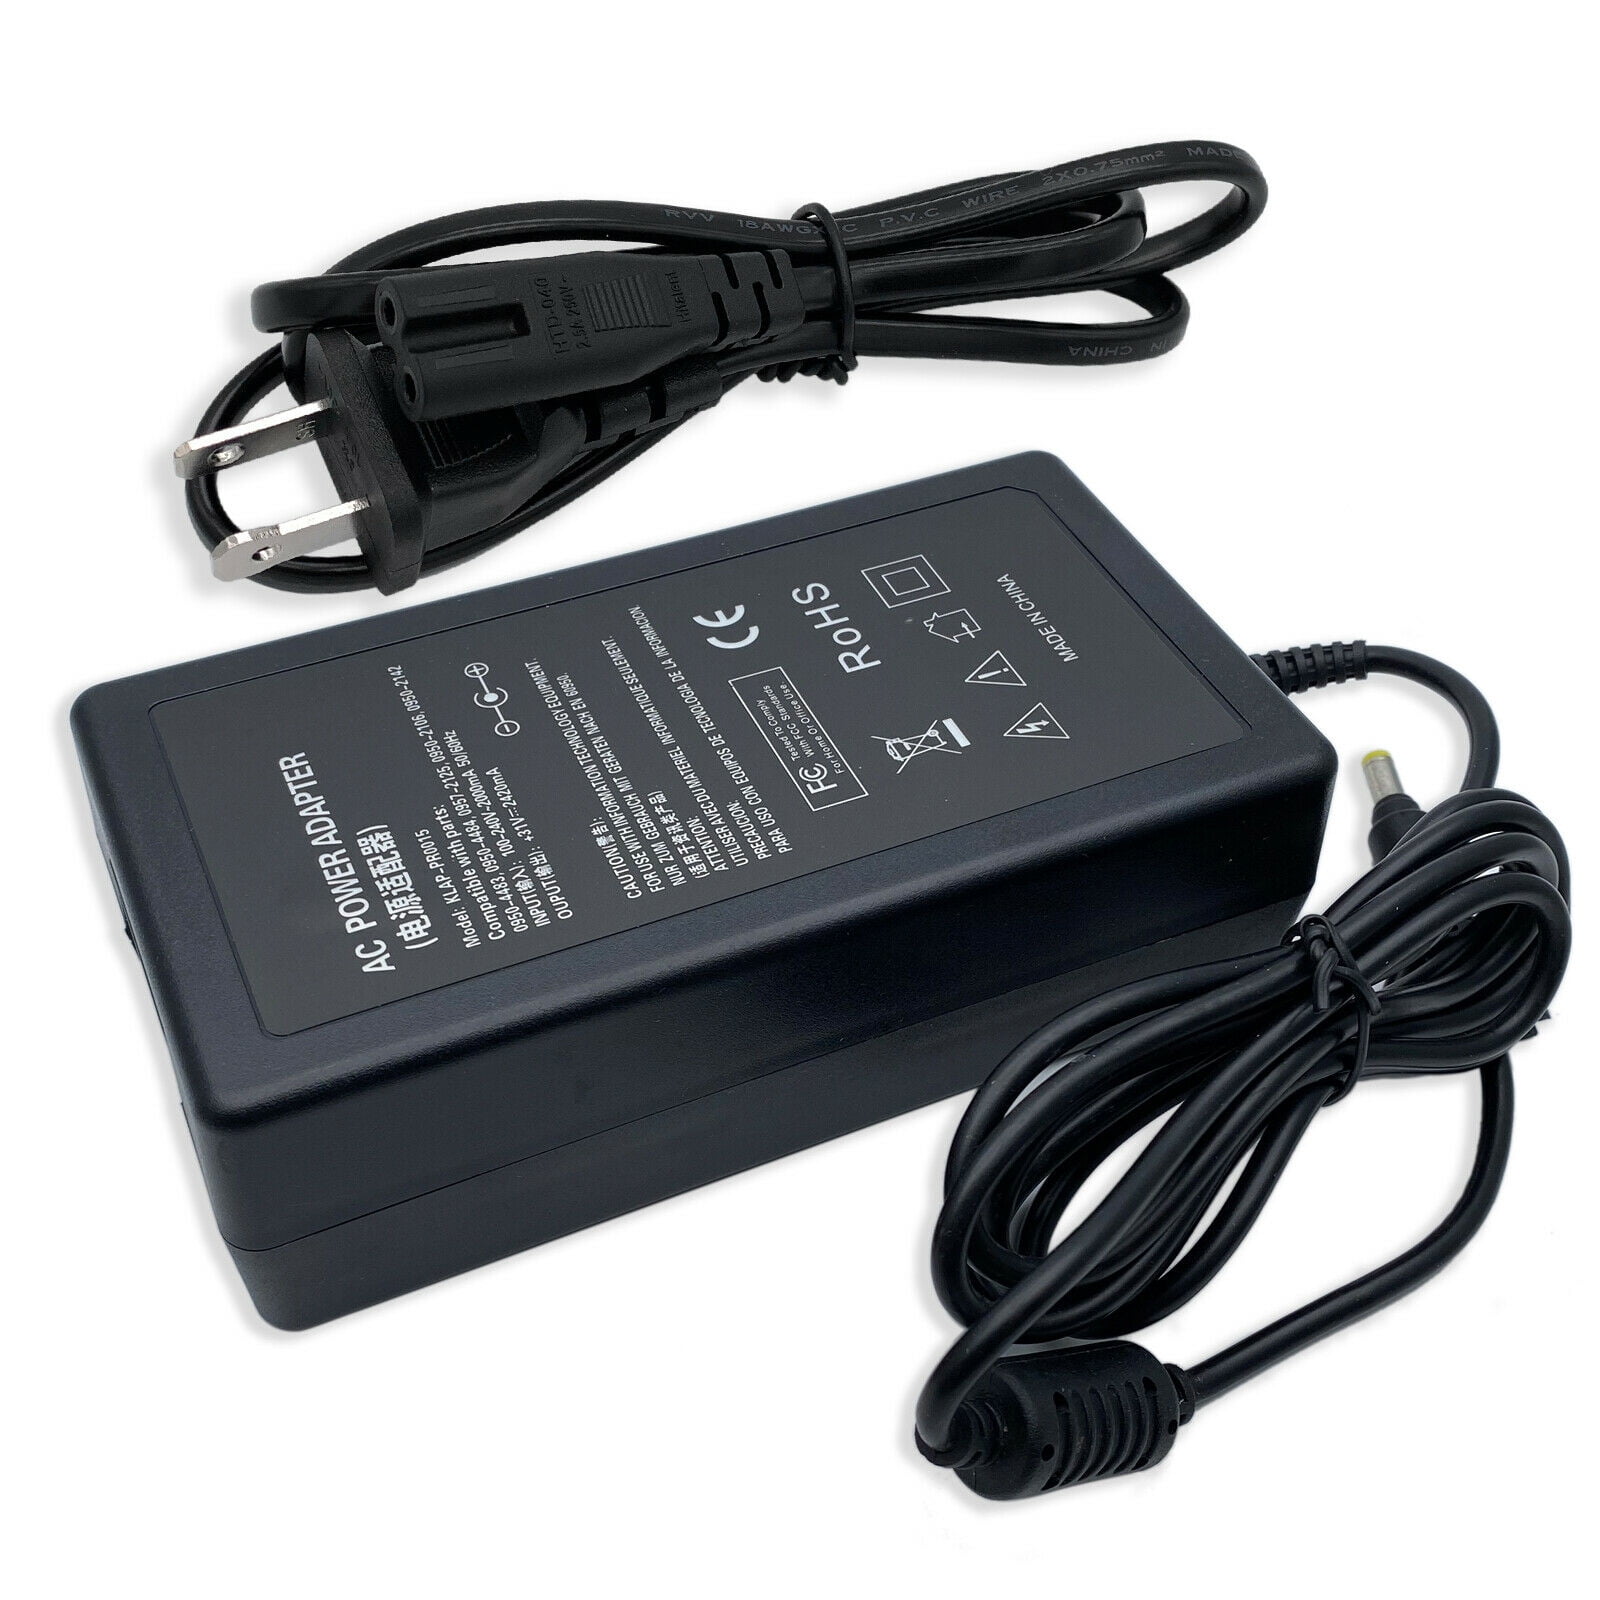 AC Adapter For HP PhotoSmart 2600 2608 2610v 2610xi 2613 0950-2106 Printer Power